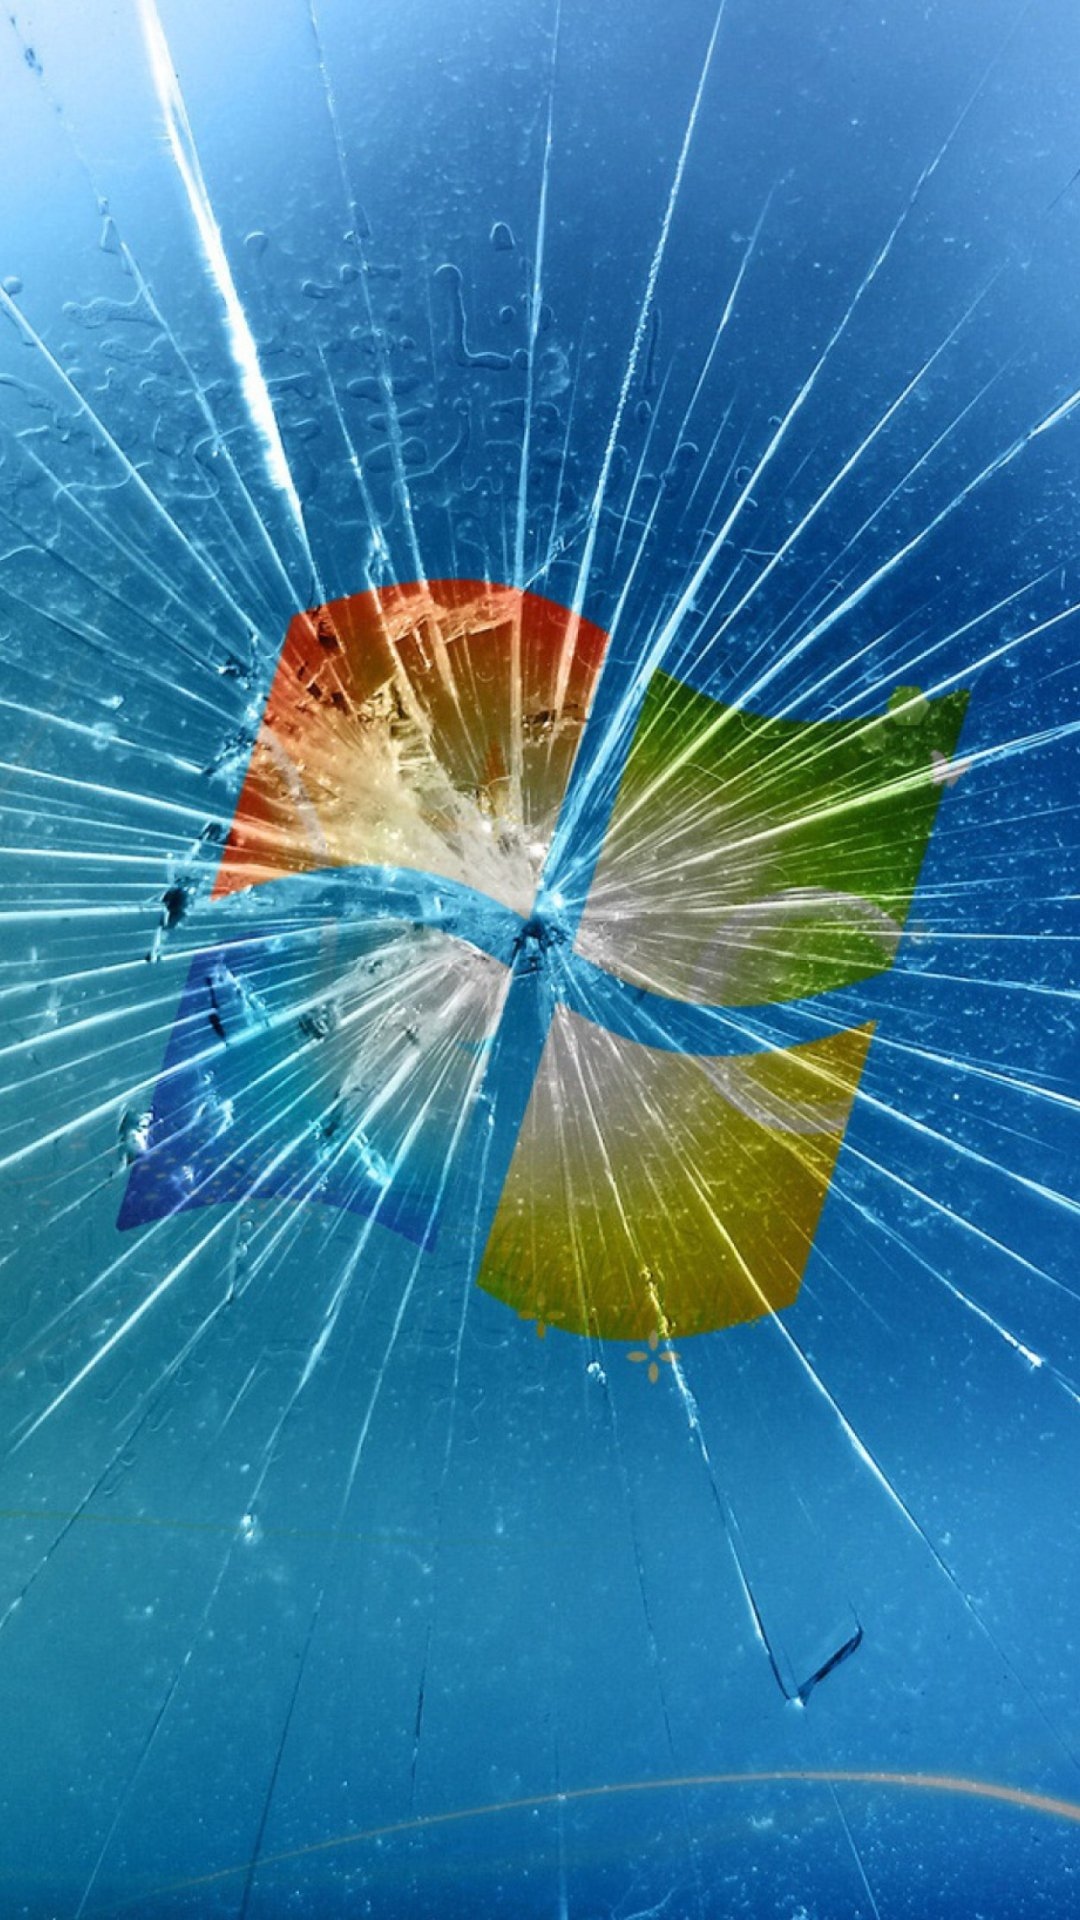 Screen Damage | Windows Screen Damage